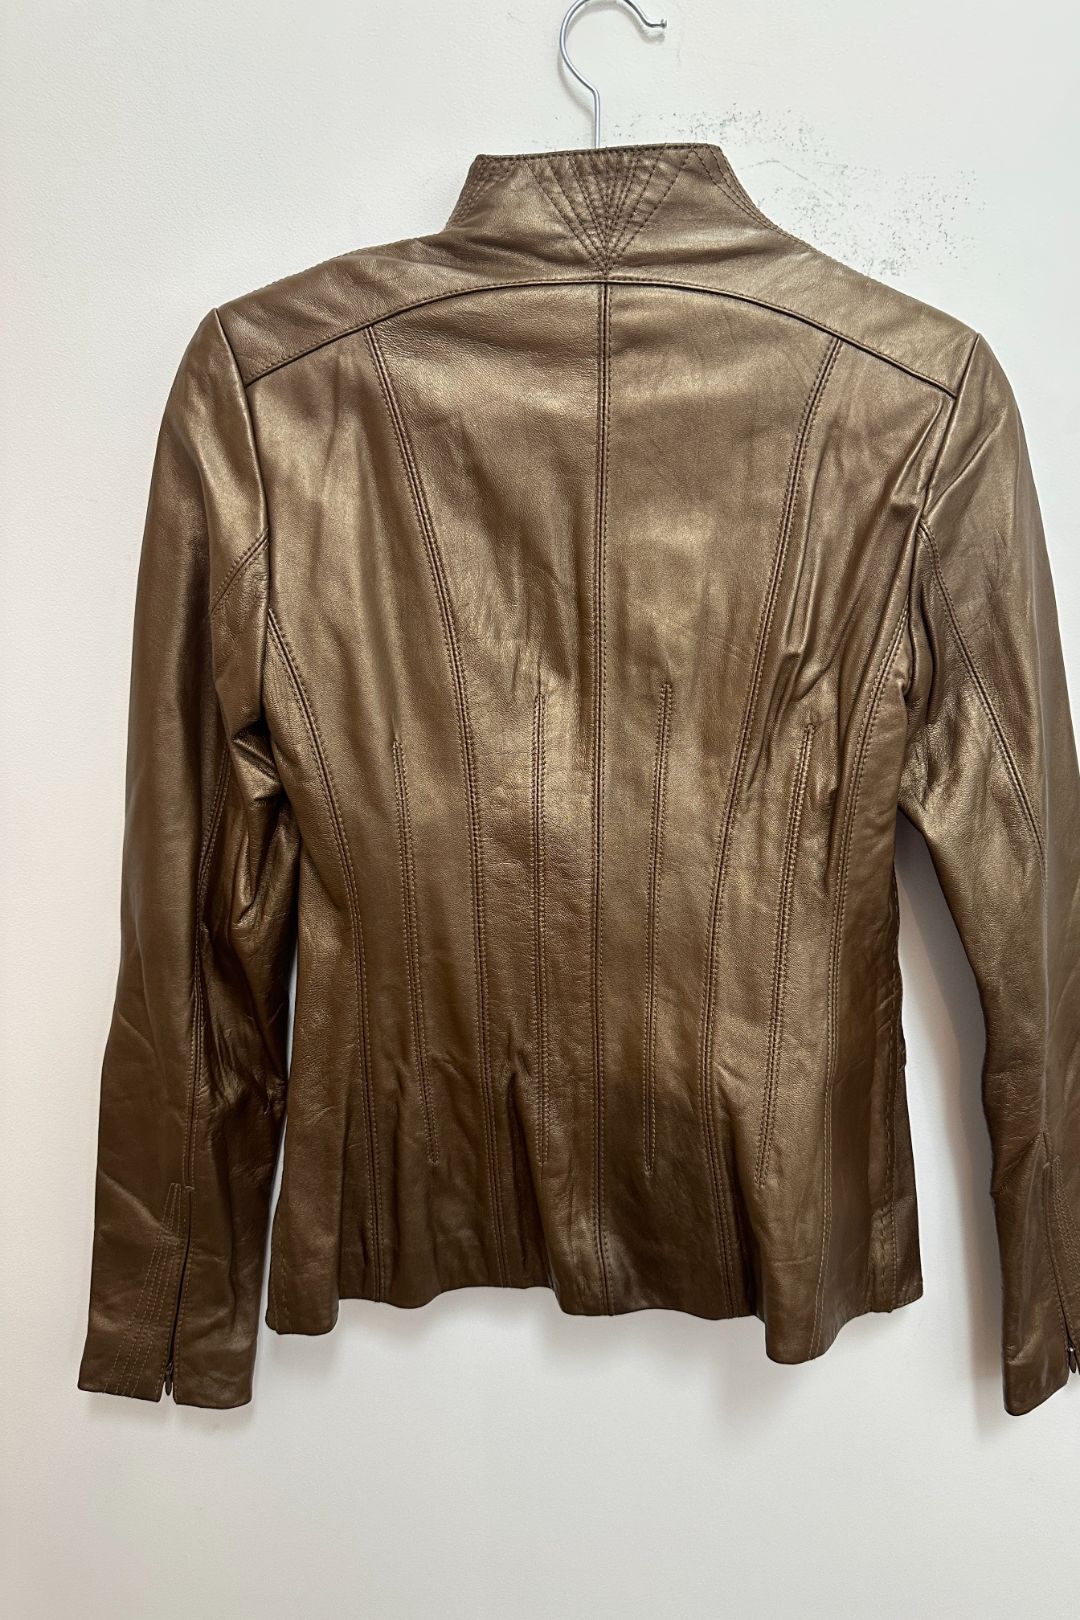 Elie Tahari  Bronze High Collar Leather Jacket 